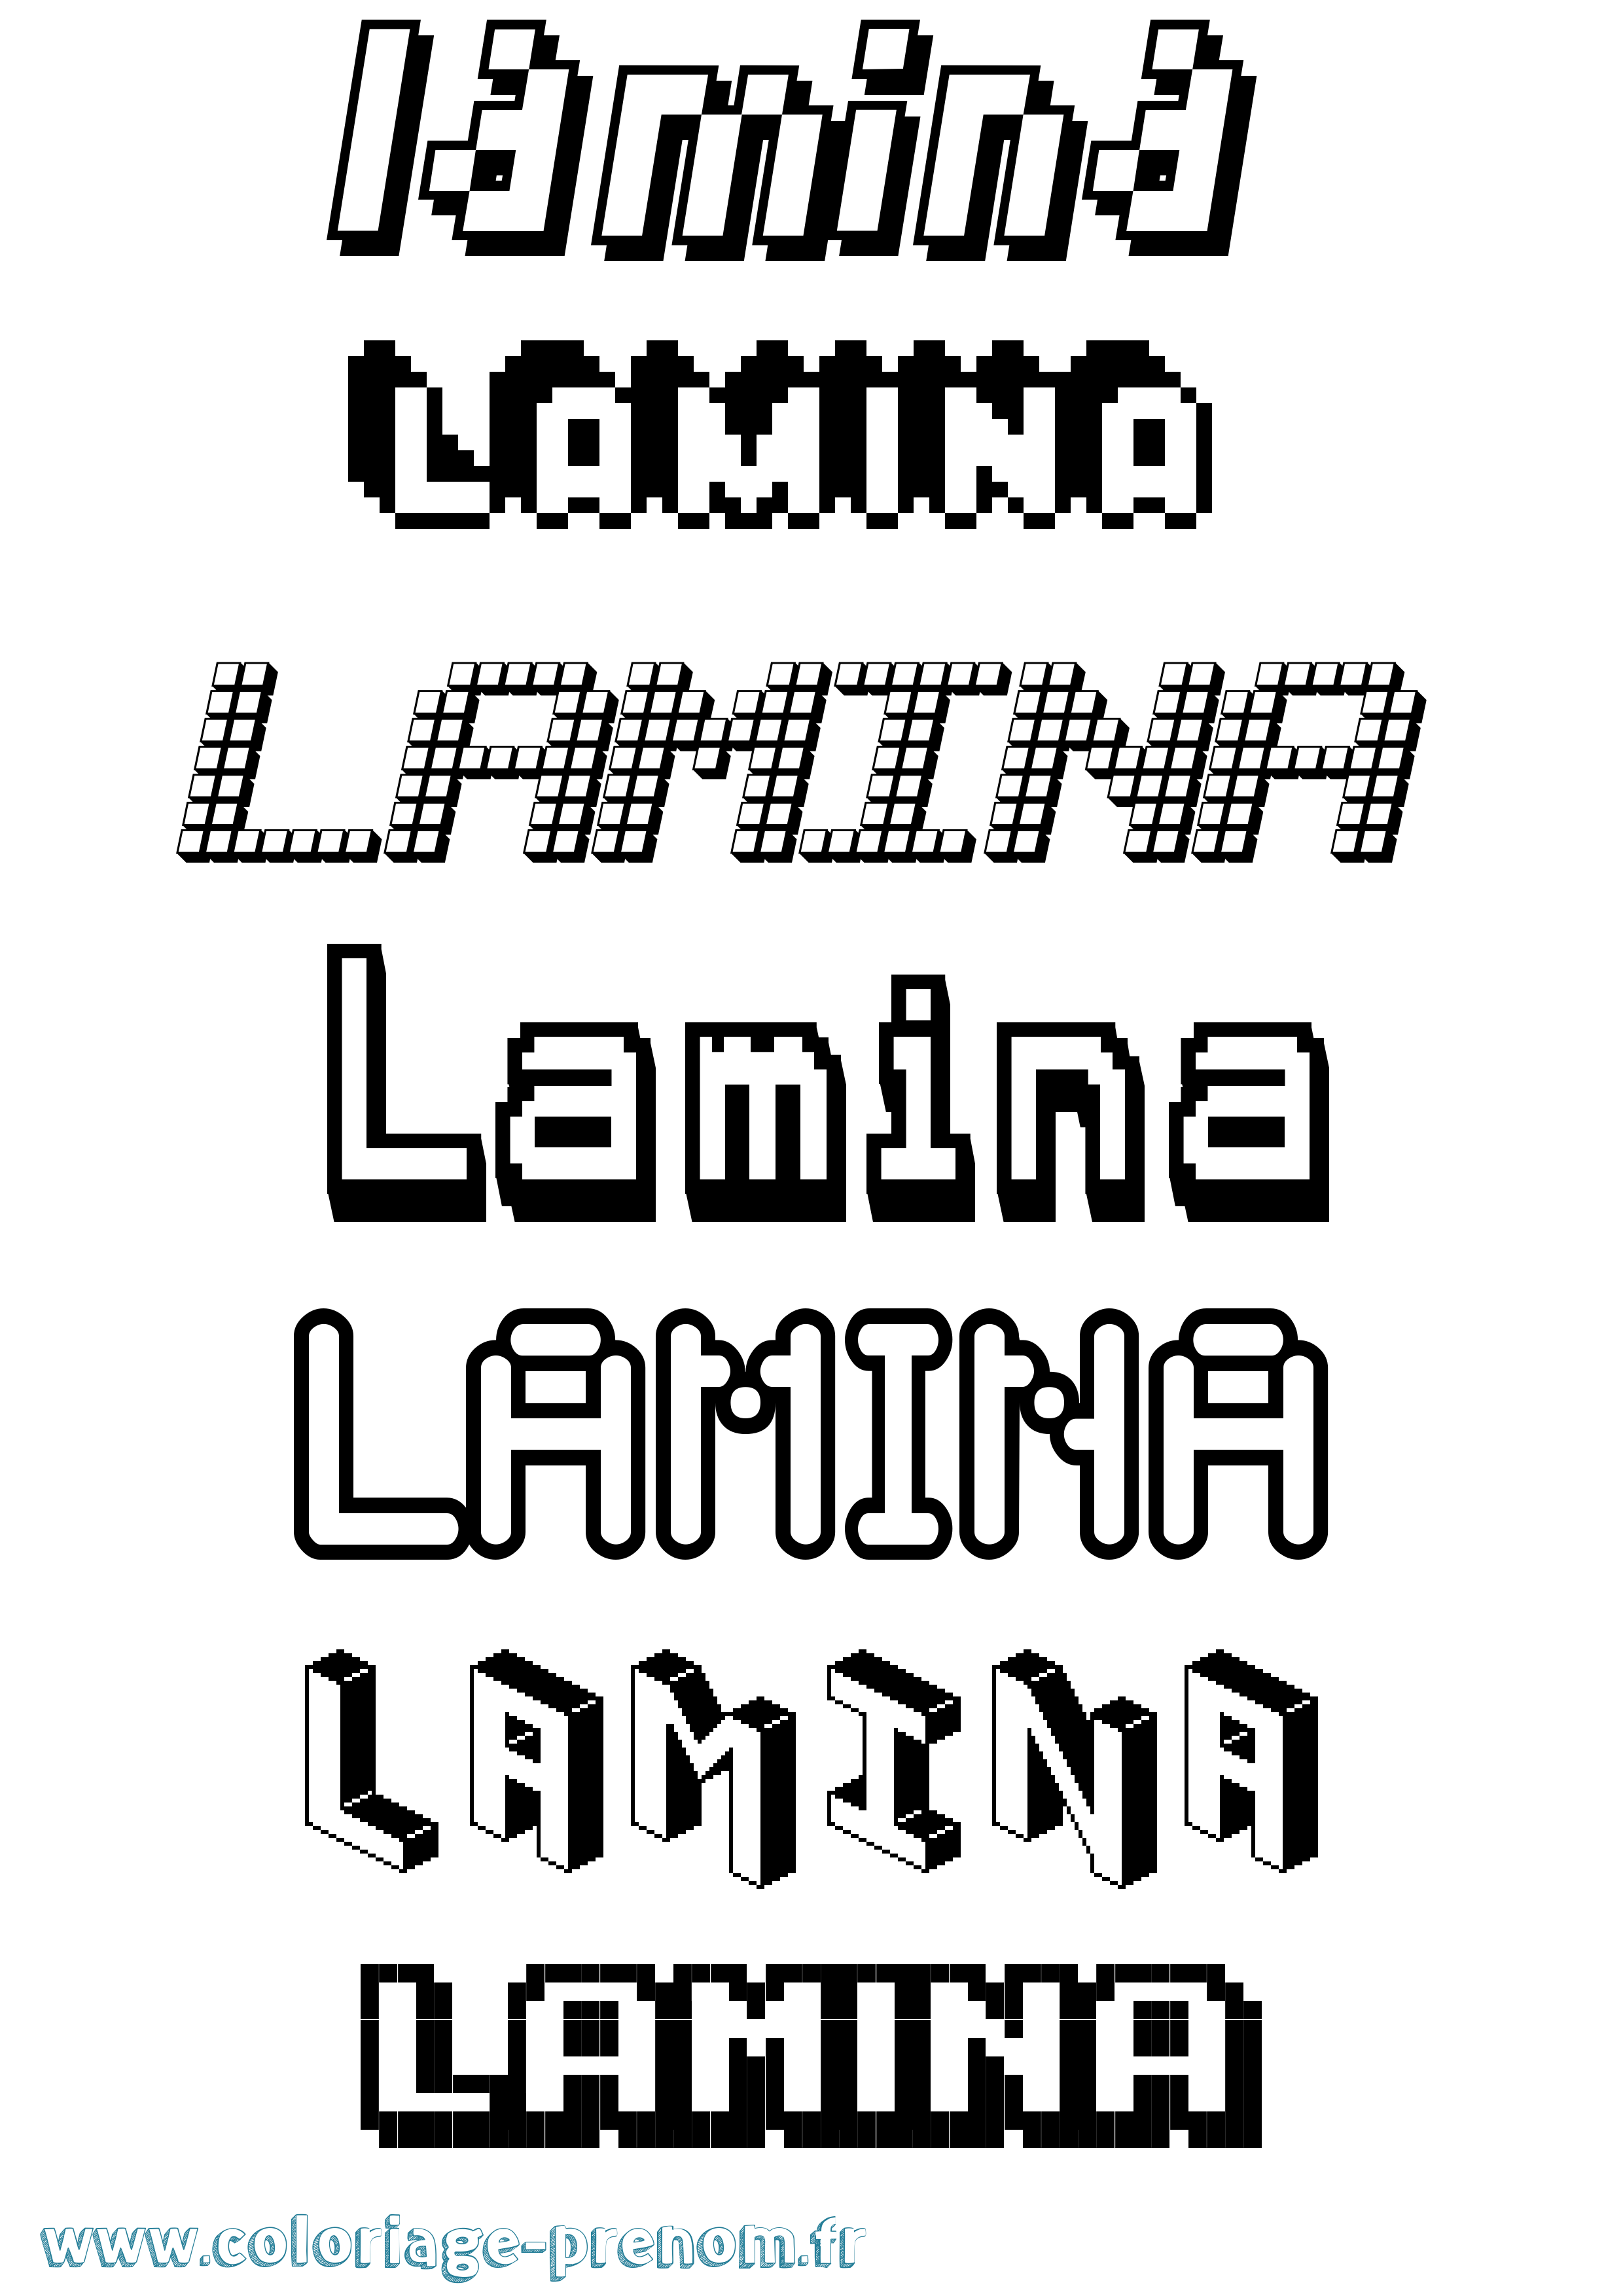 Coloriage prénom Lamina Pixel